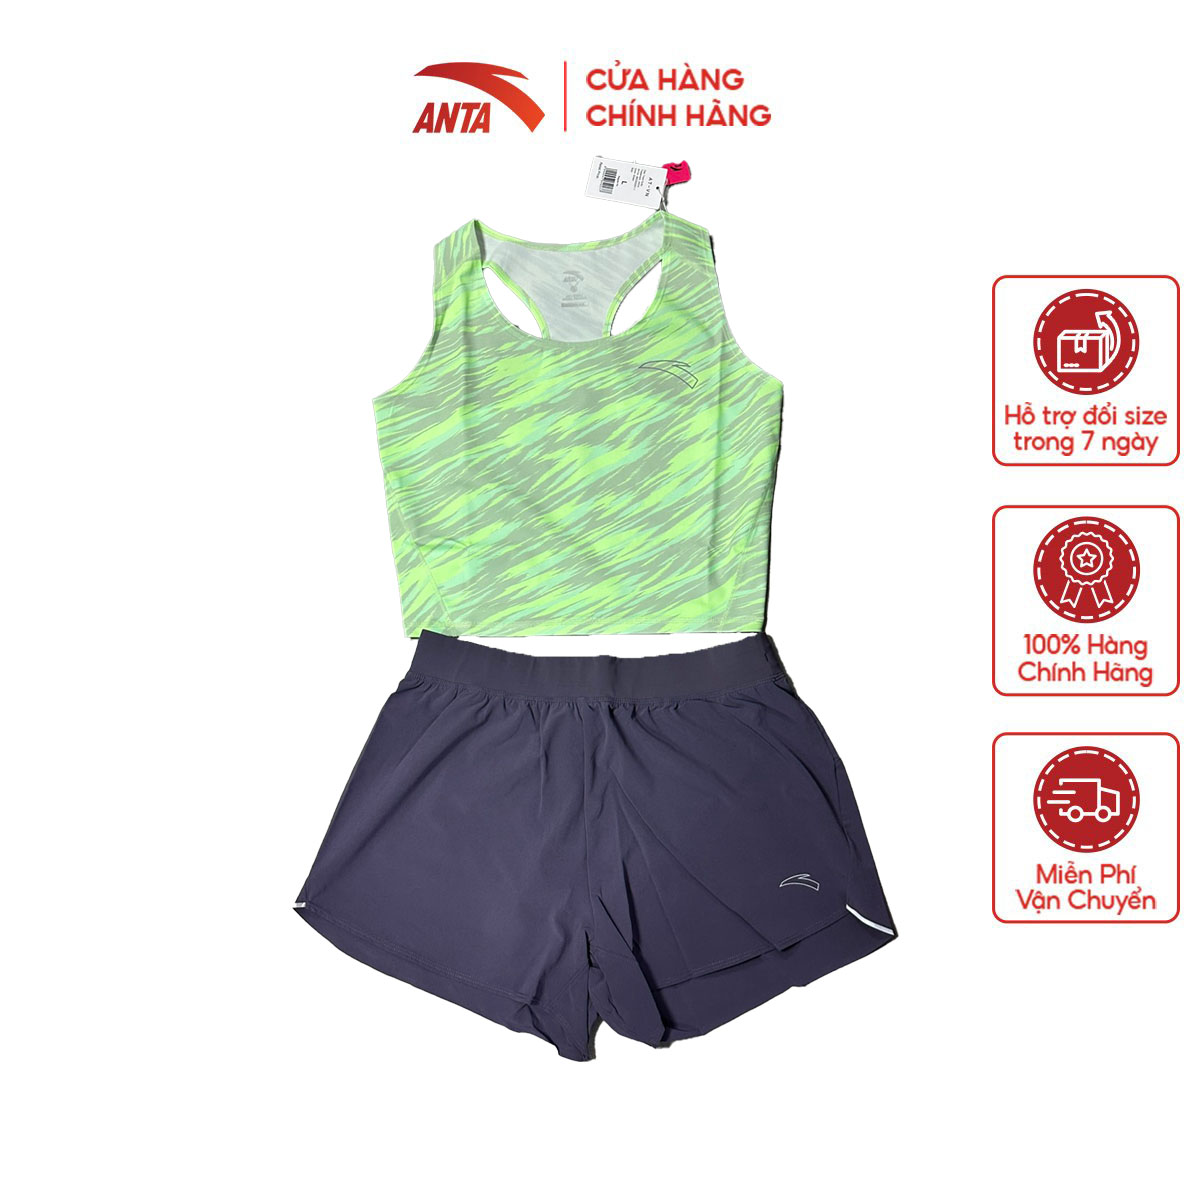 Bộ thể thao Running nữ A-COOL Anta 862325201-1